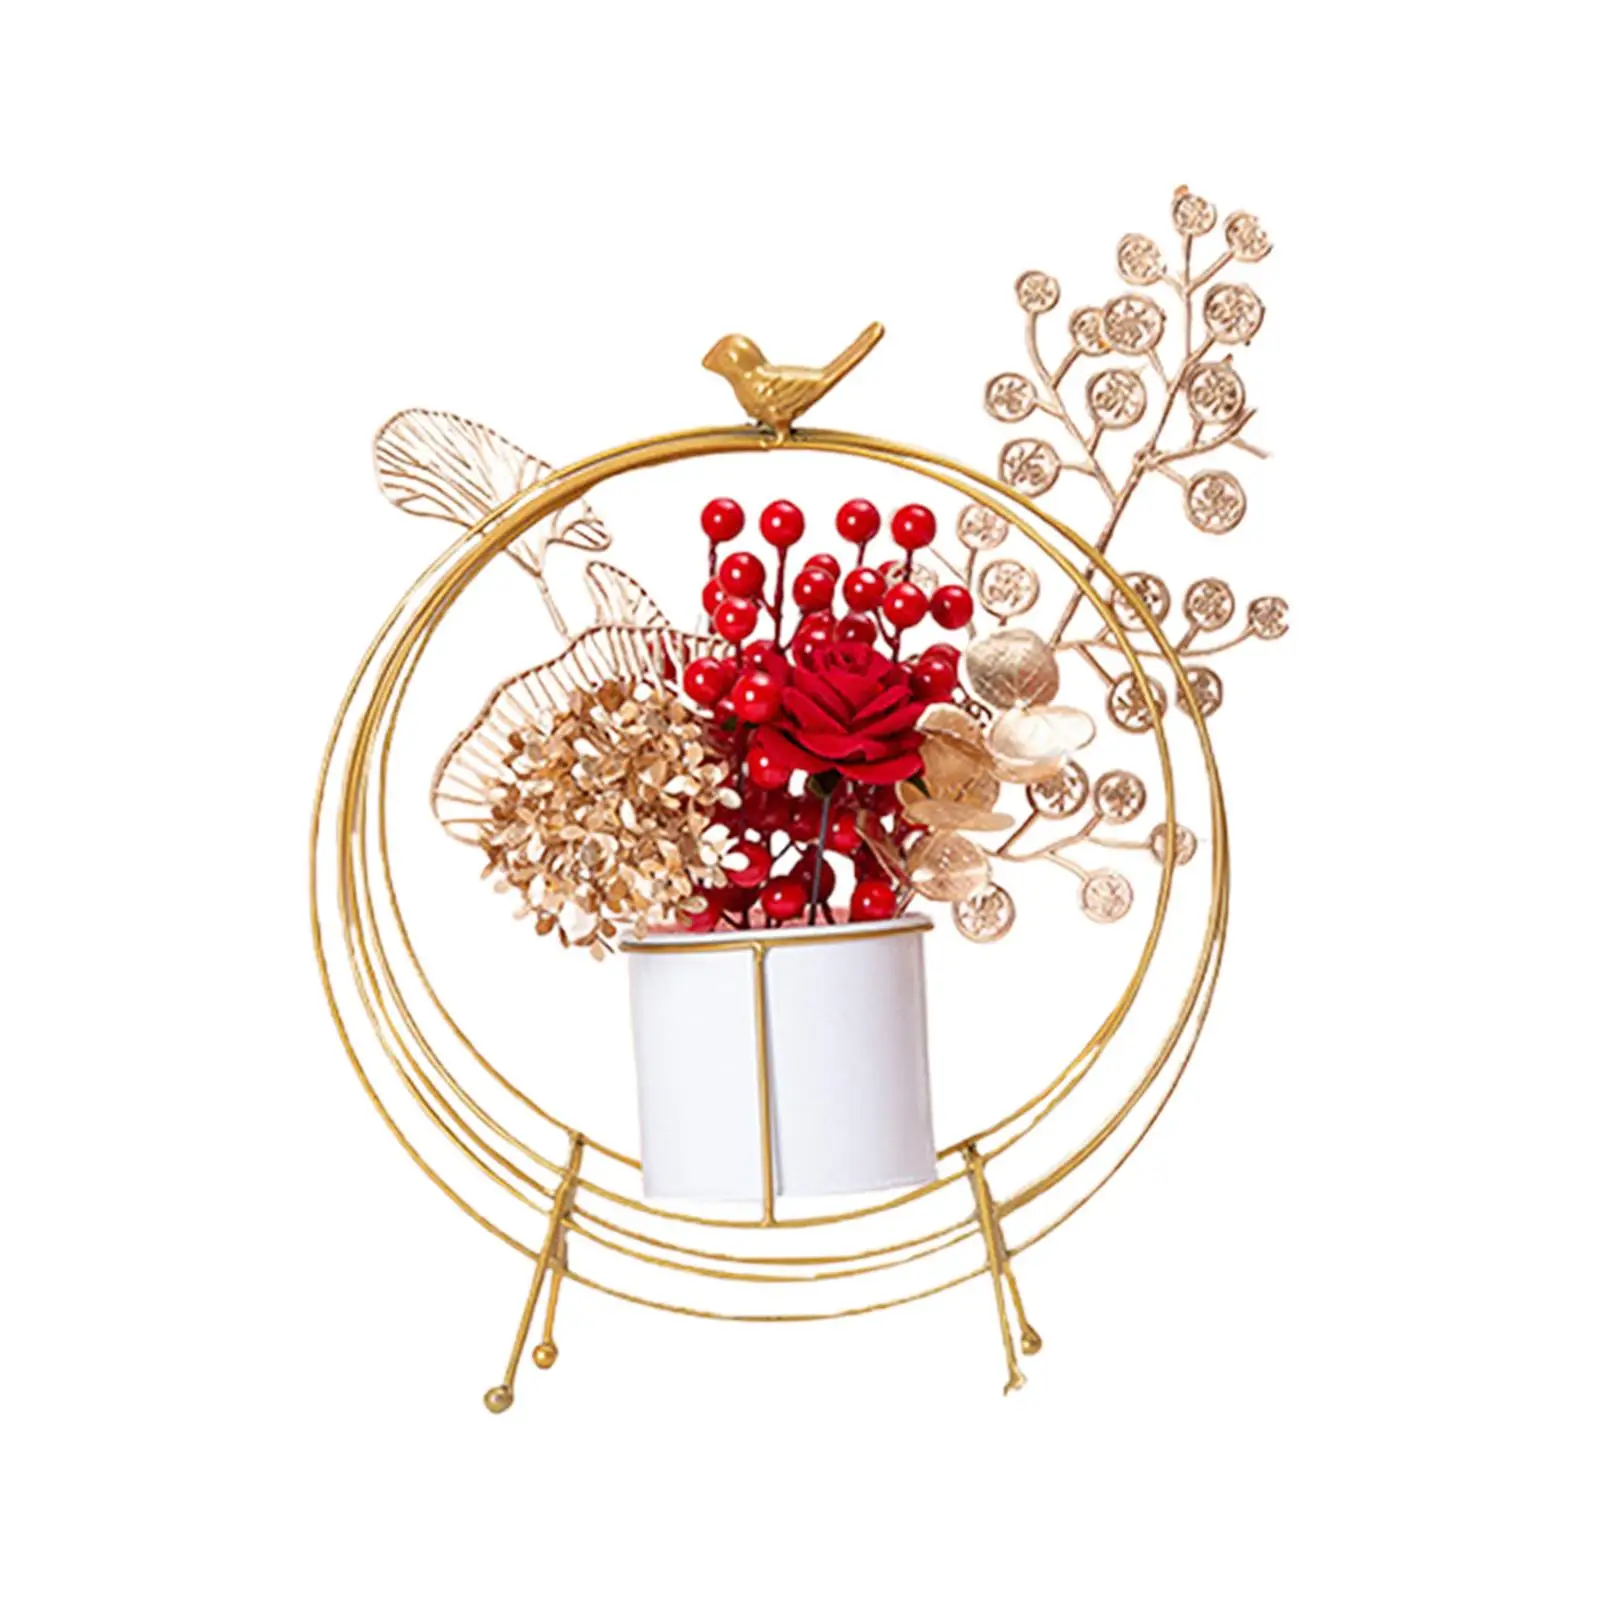 Flower Basket Red Berries Photo Props Decoration Ornament for Spring Festival Living Room